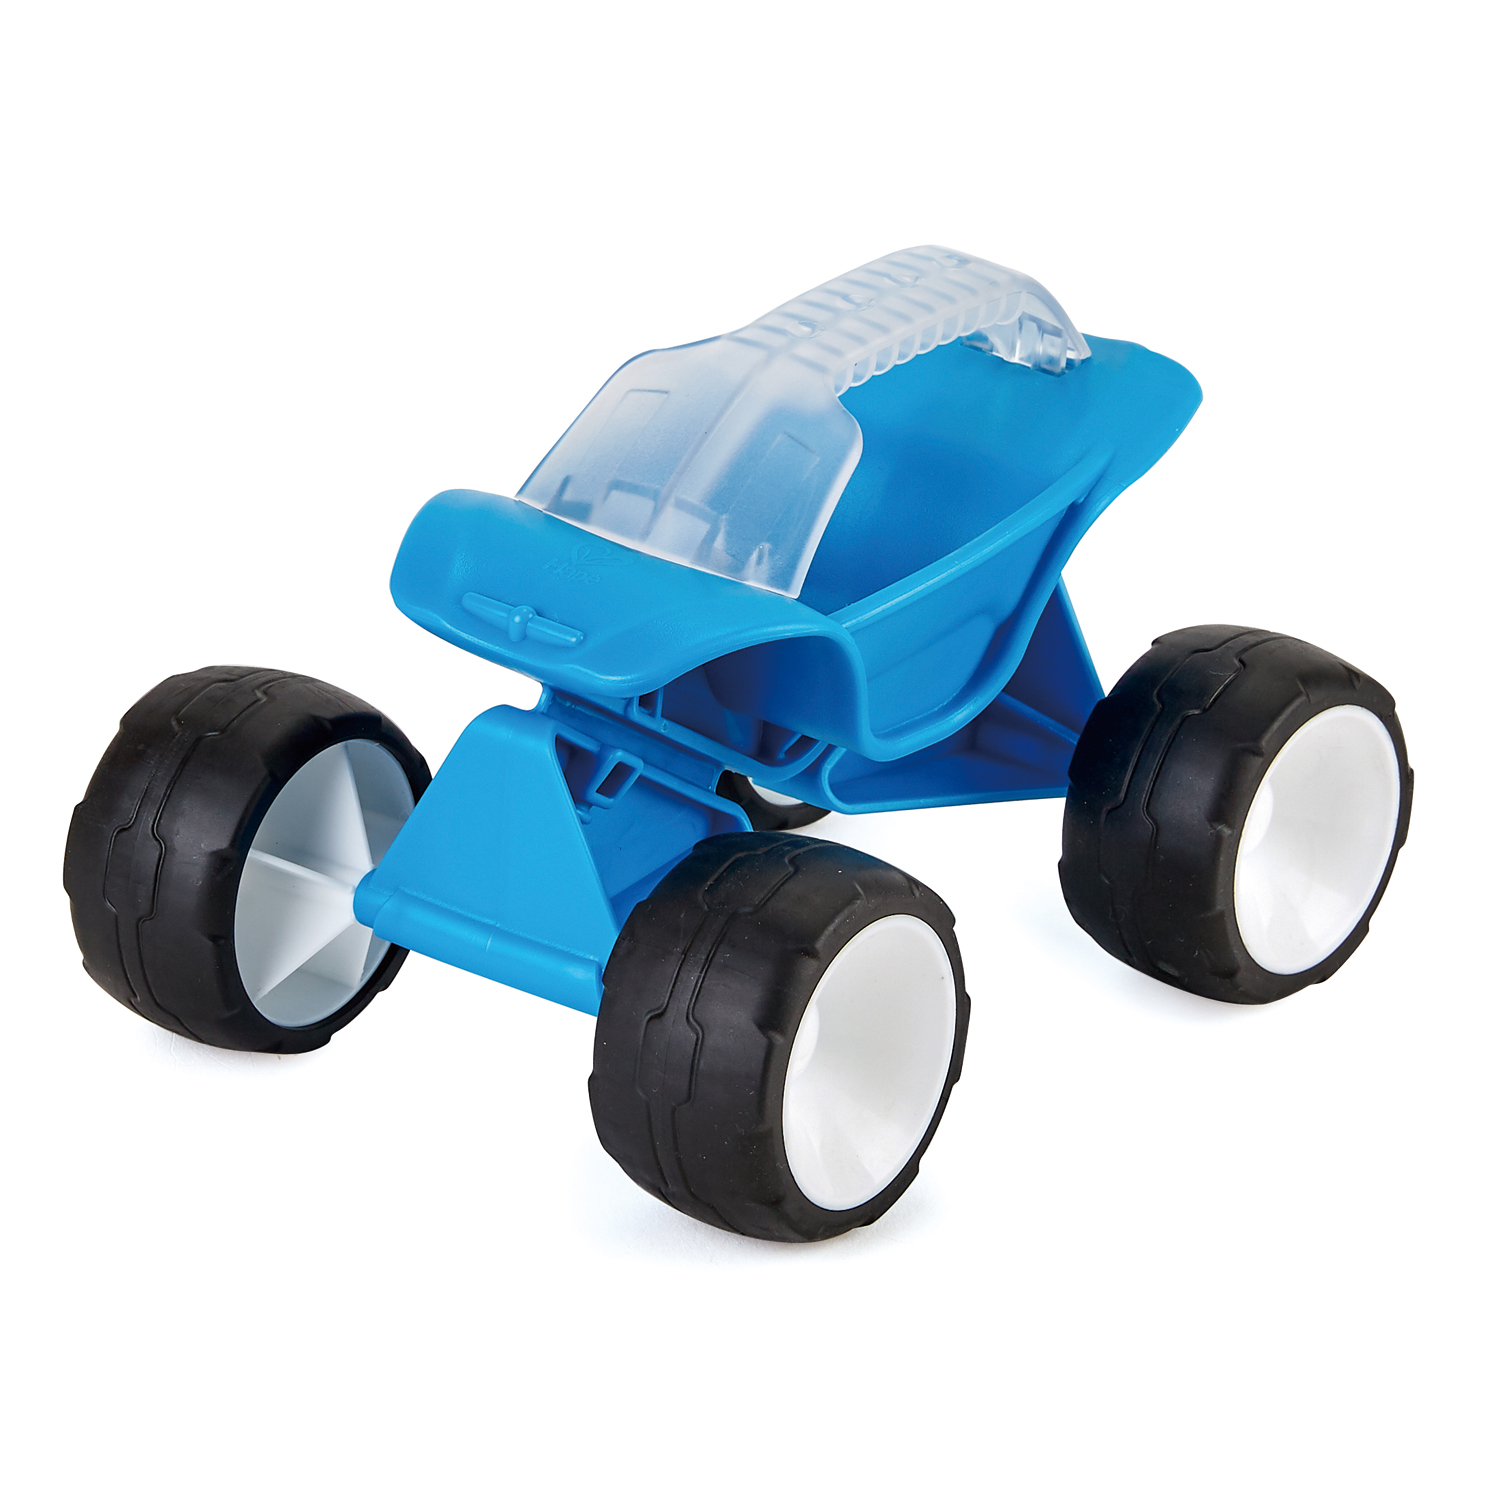 Hape E4087 Strandbuggy blau Sandspielzeug Strandspielzeug NEU!# 